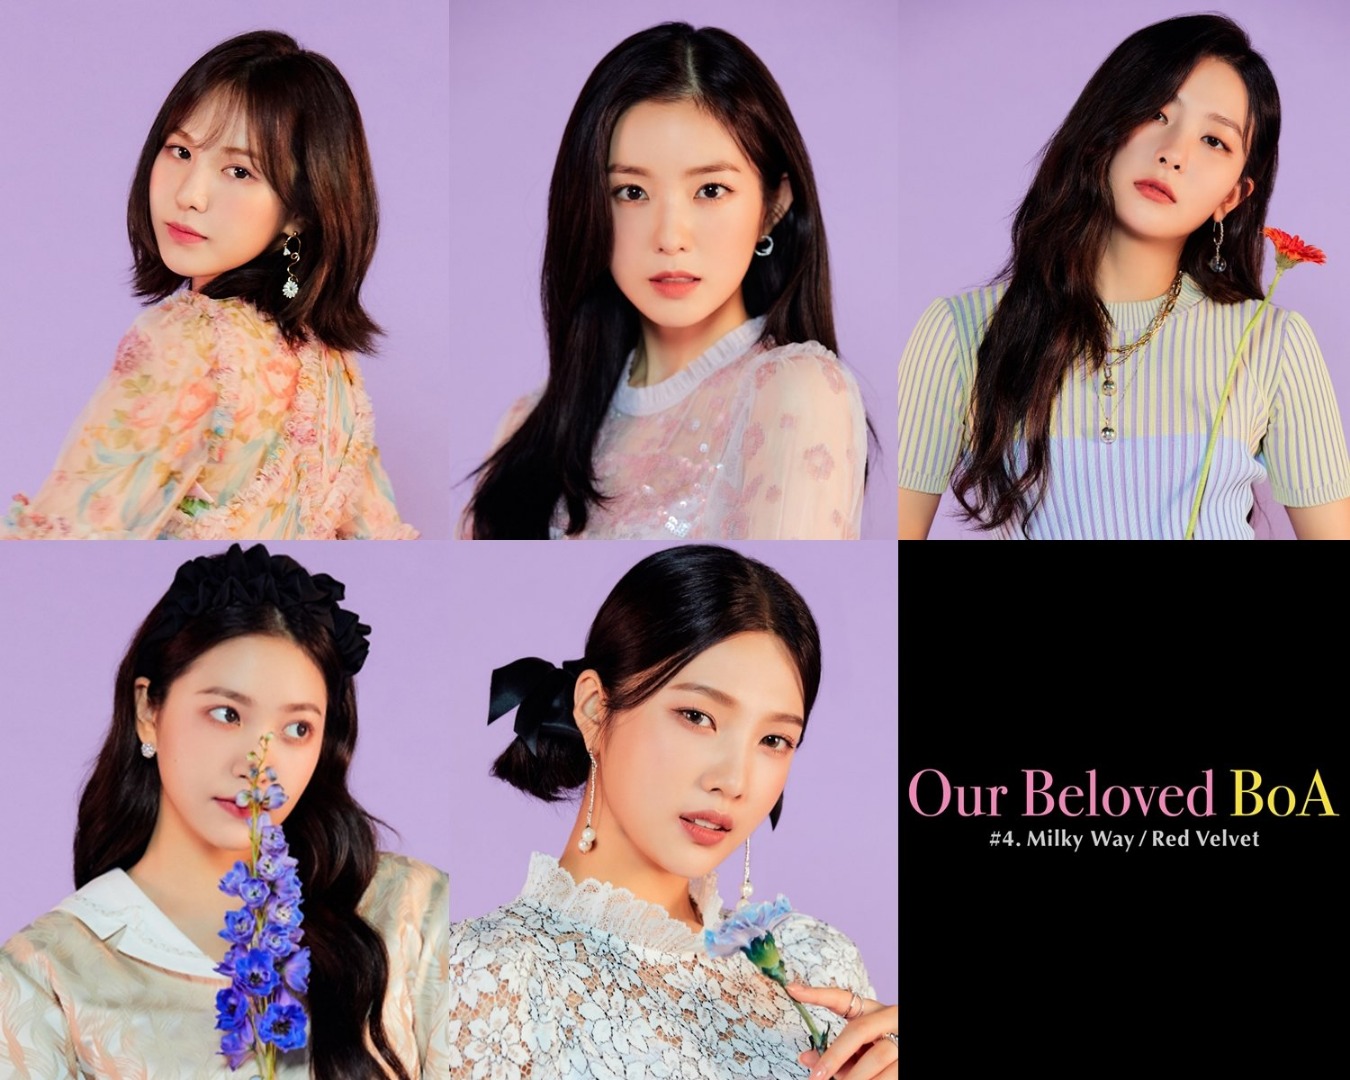 Red Velvet: Our Beloved BoA